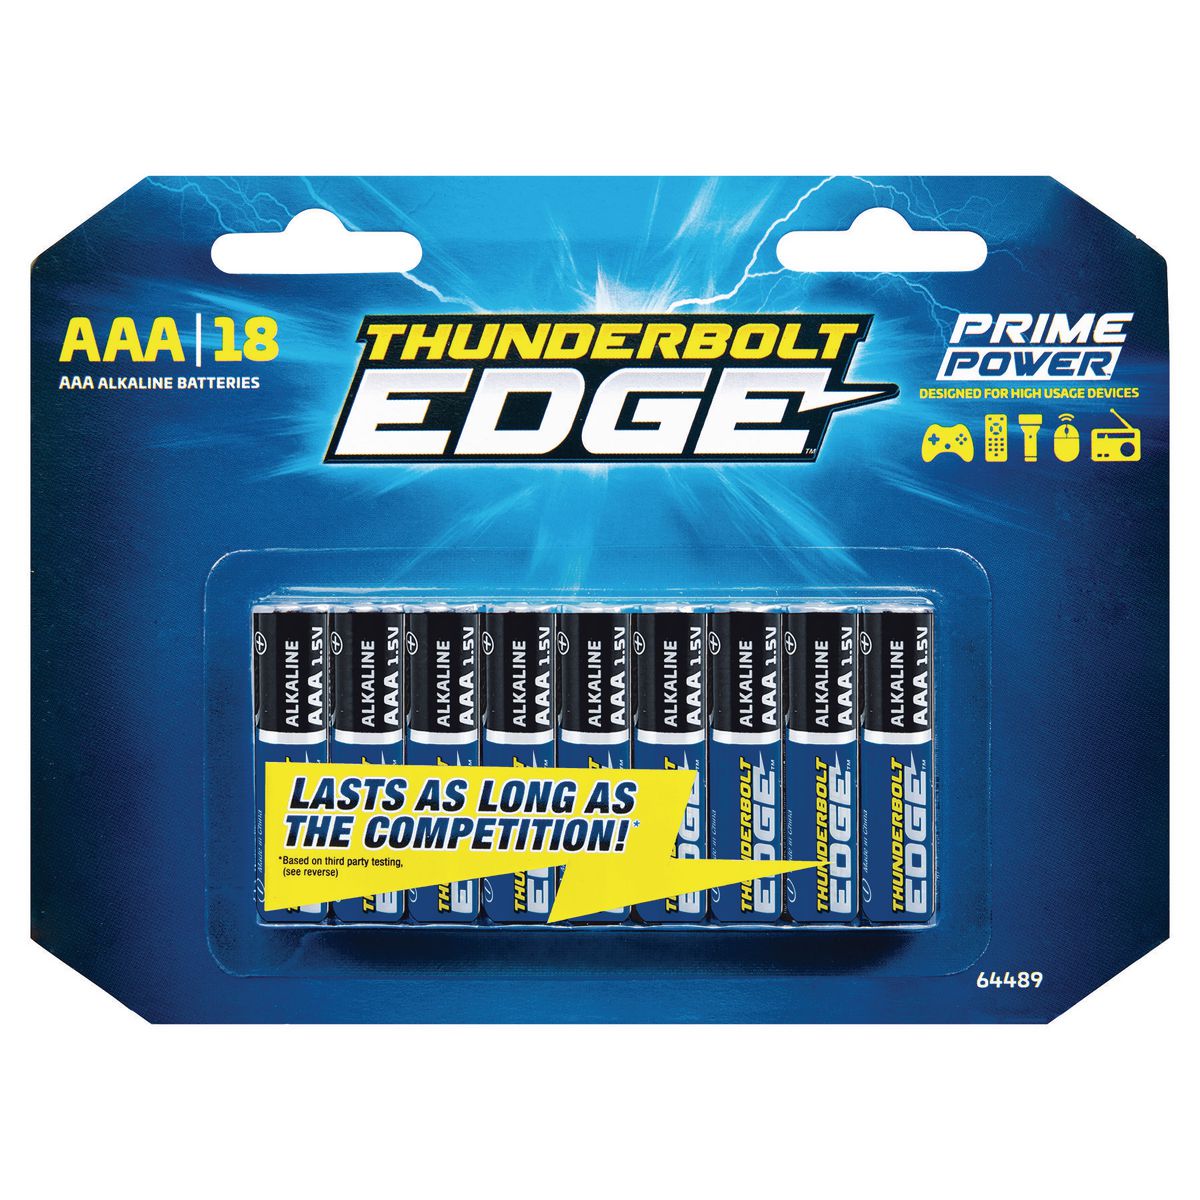 THUNDERBOLT EDGE AAA Alkaline Batteries - 18 Pk. – Item 64489